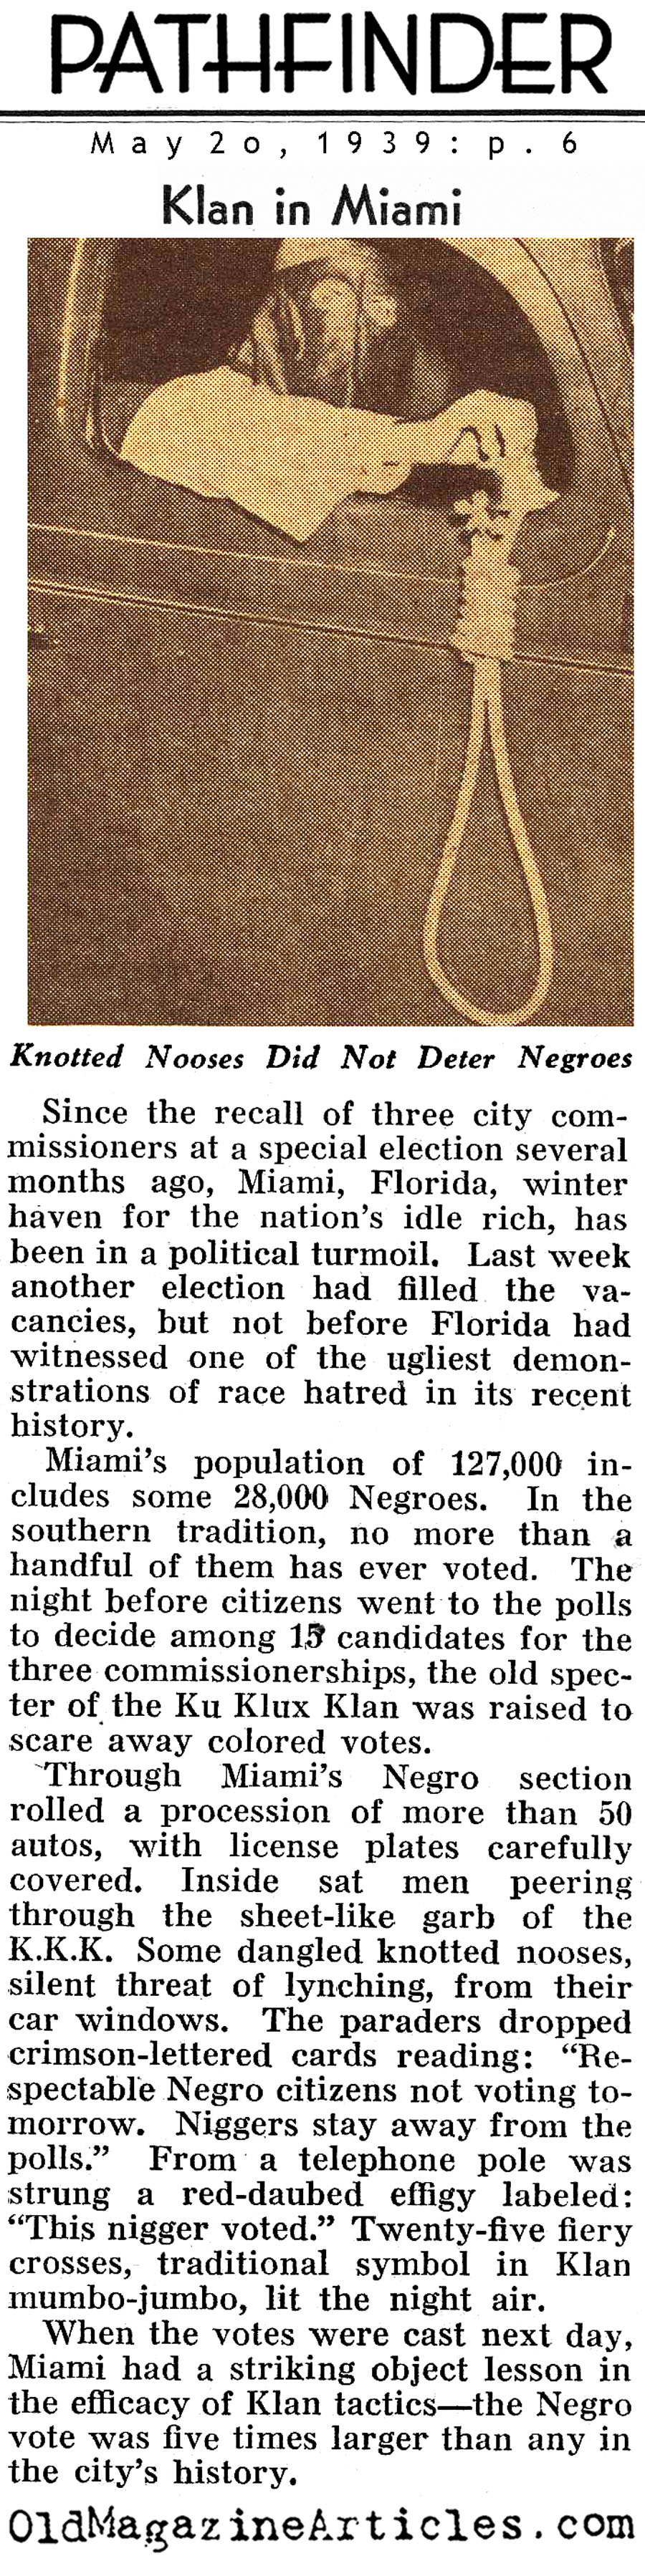 The Klan in Miami (Pathfinder Magazine, 1939)